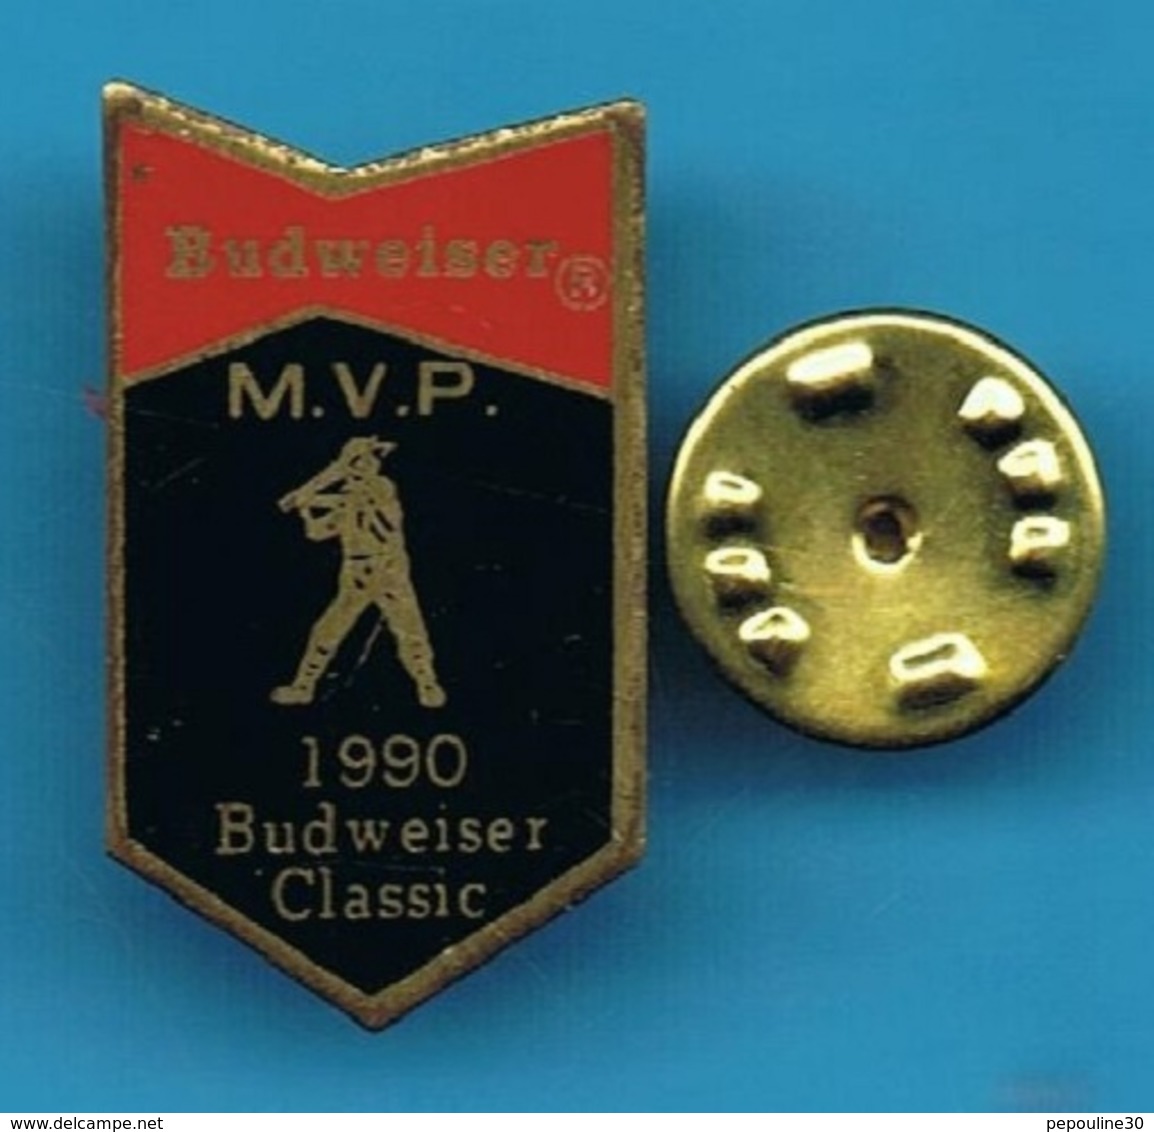 1 PIN'S //  ** BIÈRE / BUDWEISER / BASEBALL M.V.P. / 1990 / BUDWEISER CLASSIC ** - Baseball